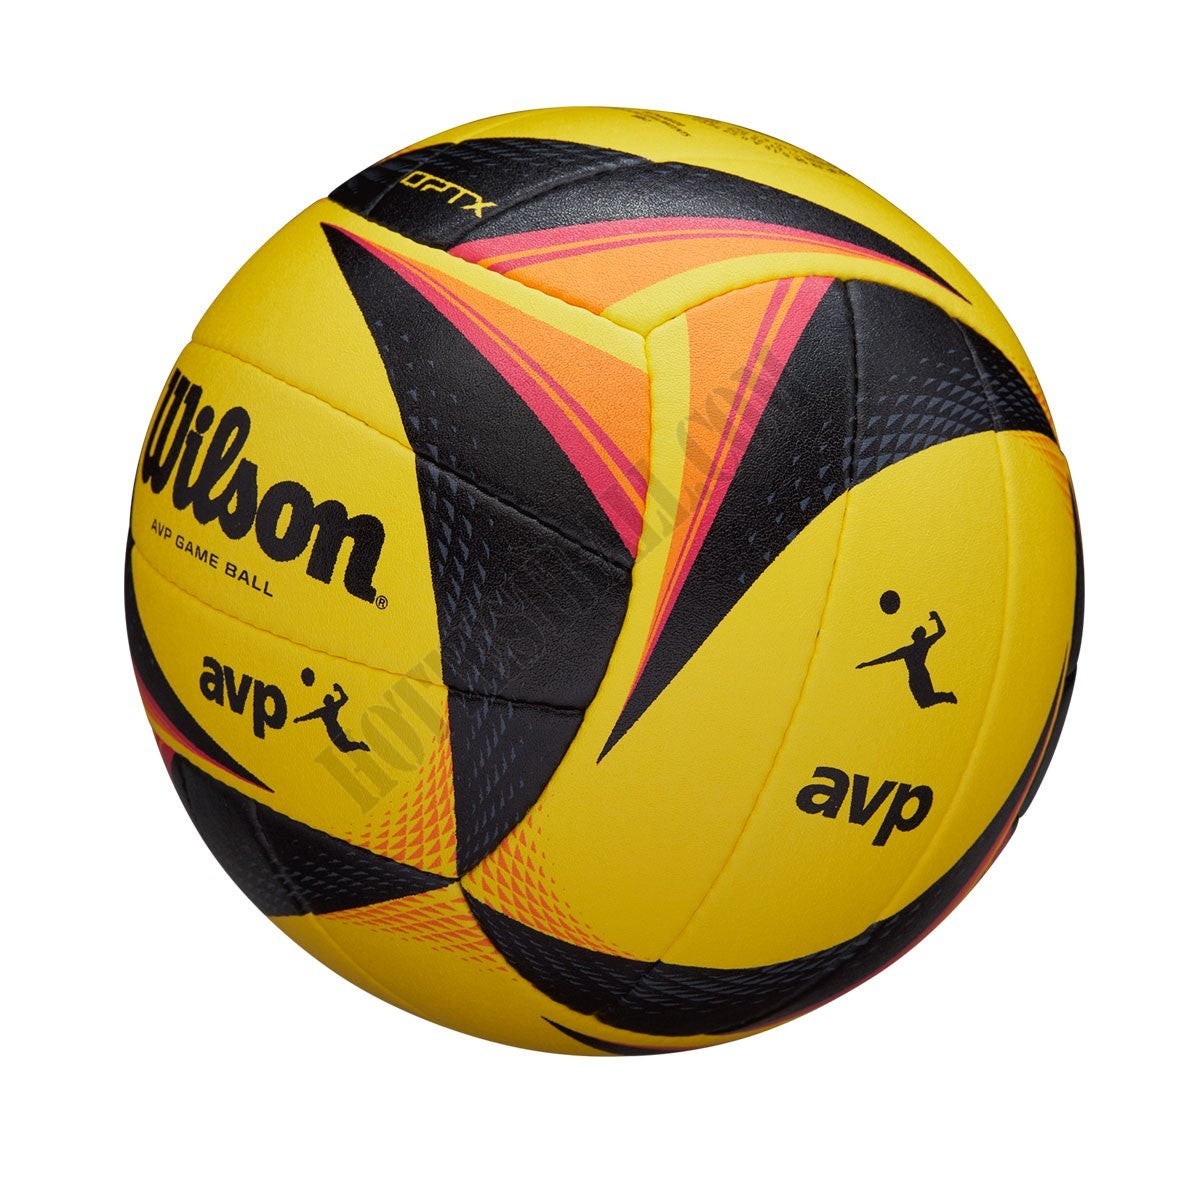 OPTX AVP Game Volleyball - Deflated - Wilson Discount Store - -2